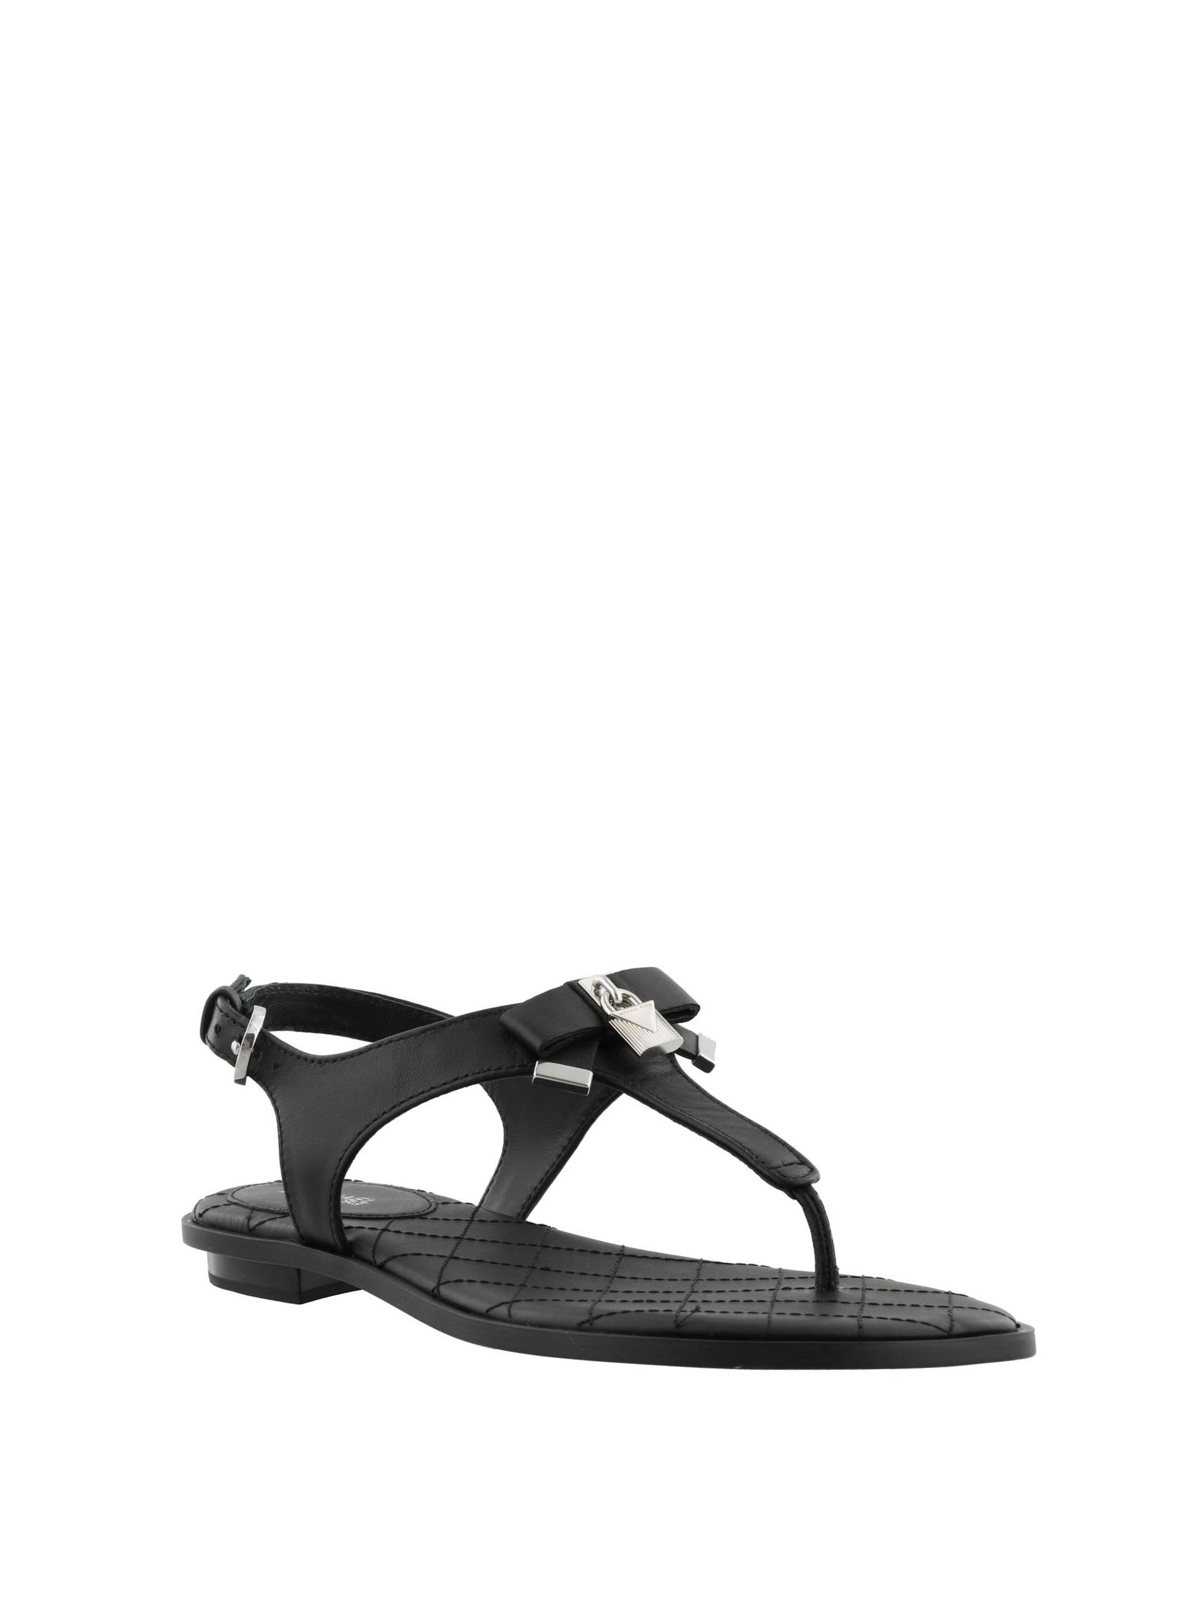 michael kors black thong sandals